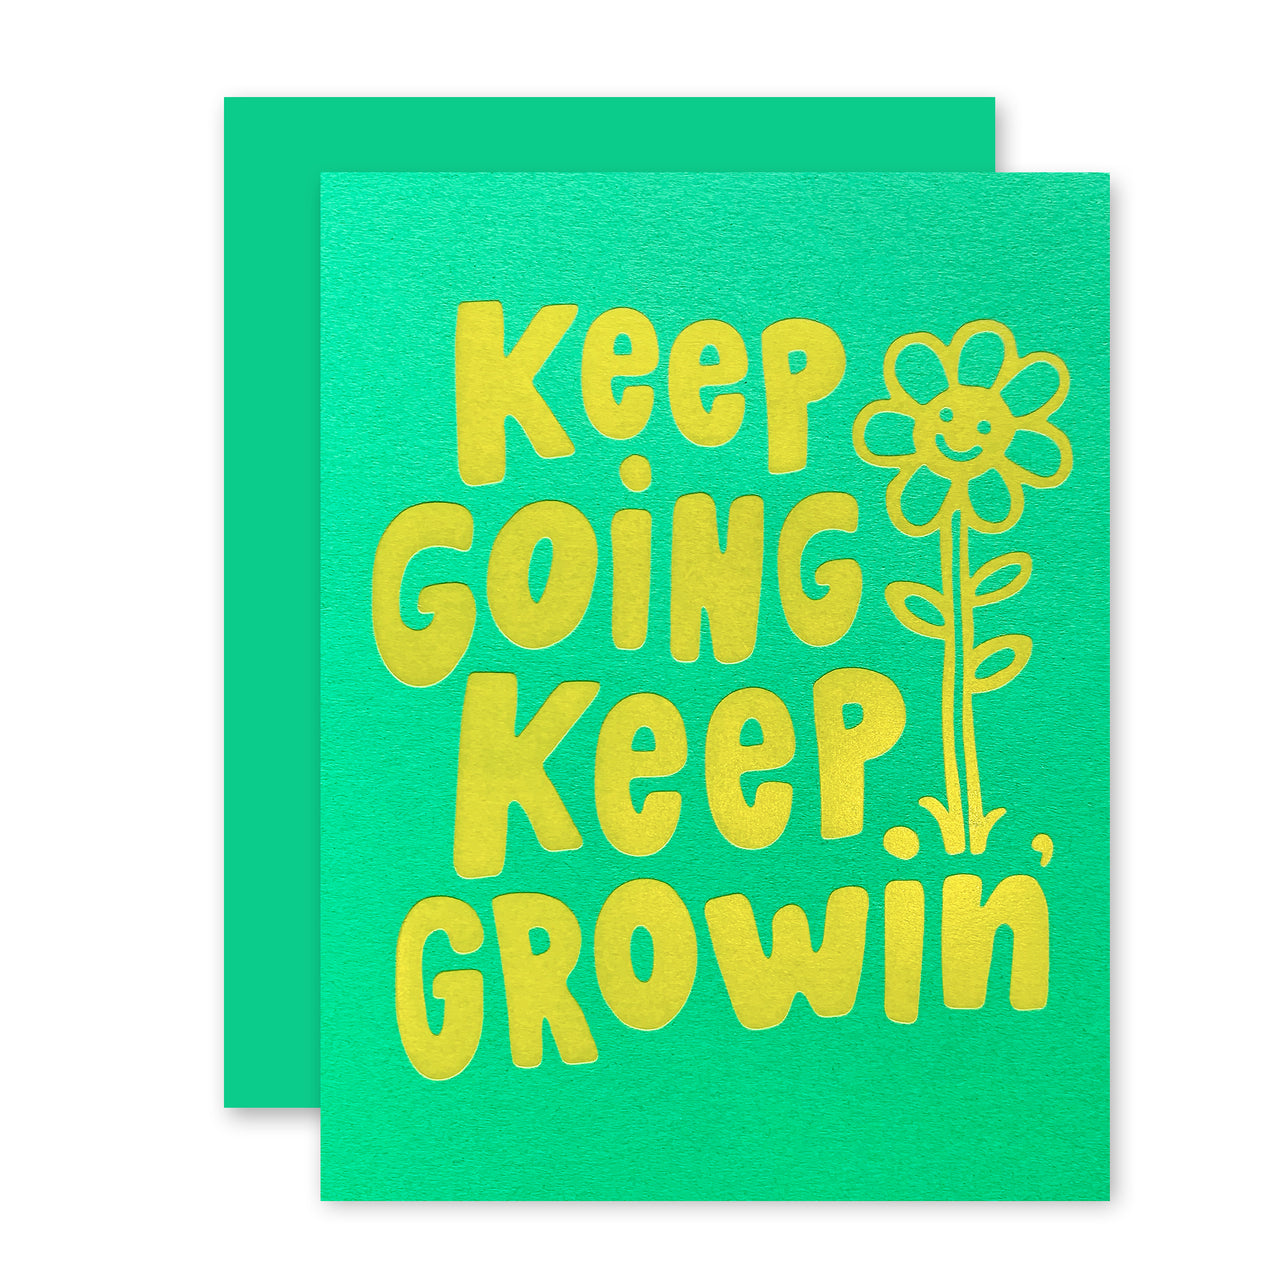 KEEP GROWIN'